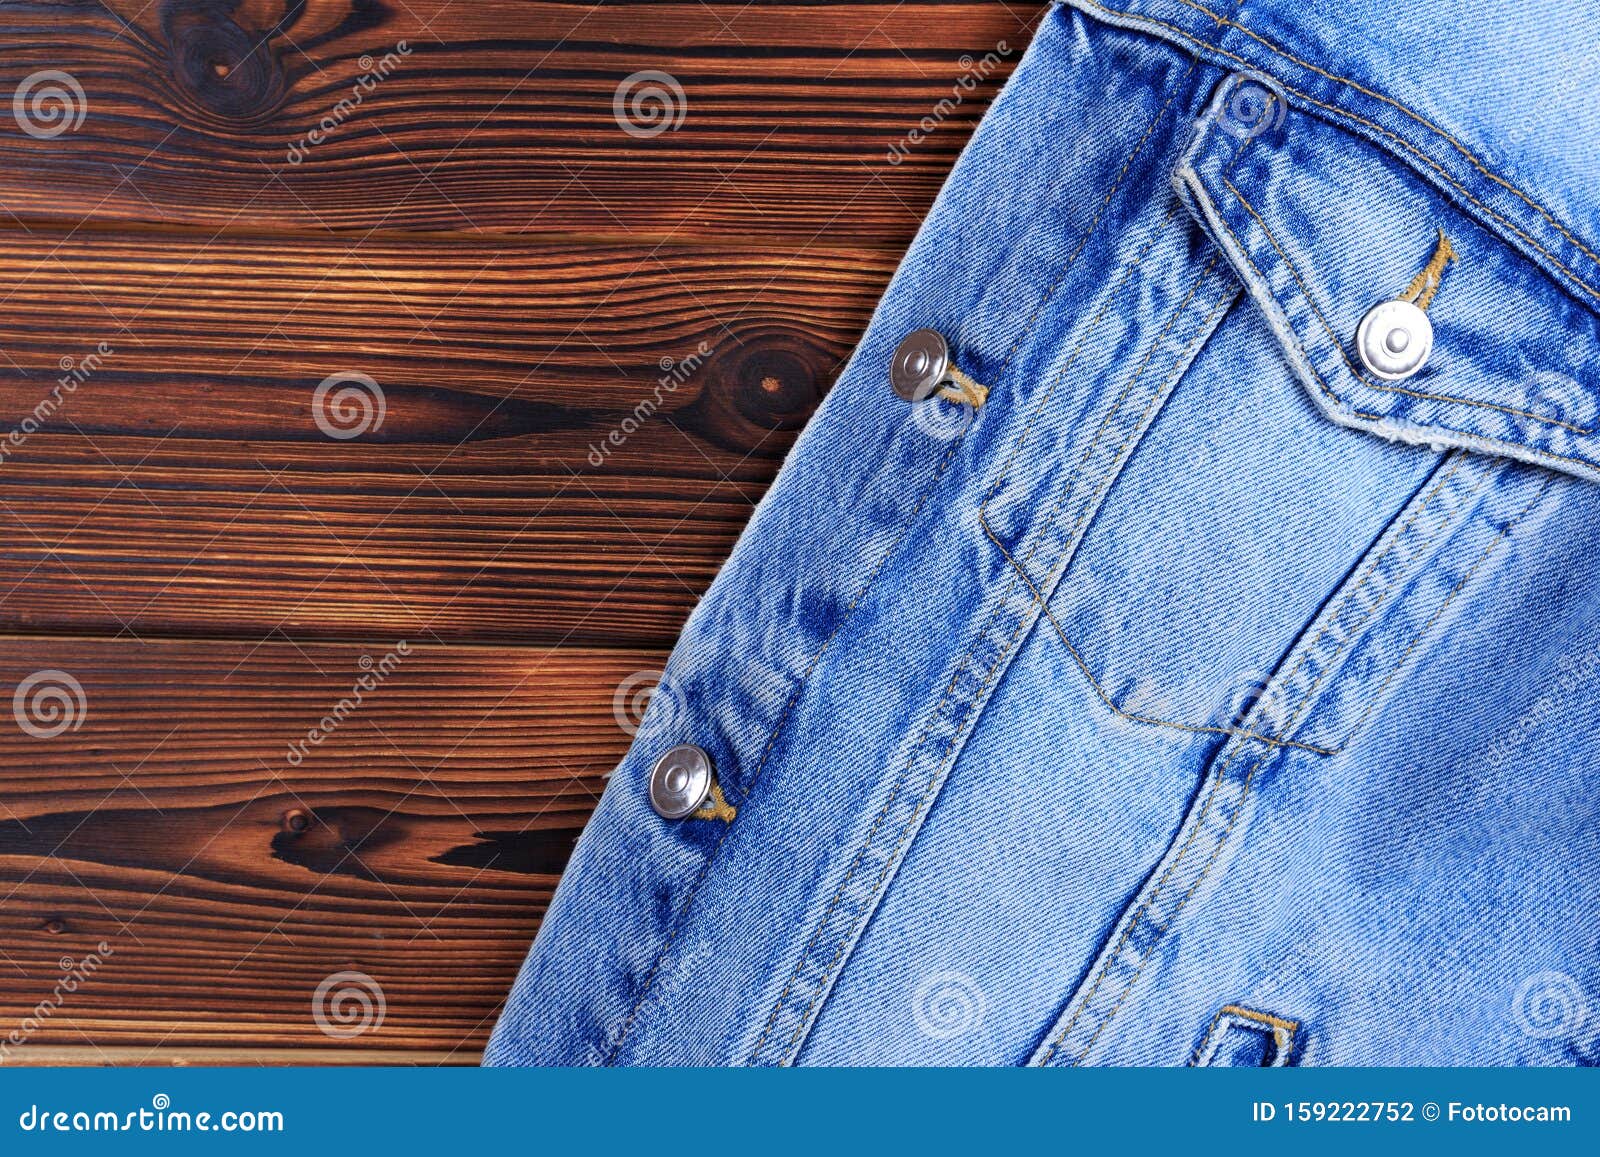 Blue Denim Jean Jacket on Wooden Background Stock Photo - Image of ...